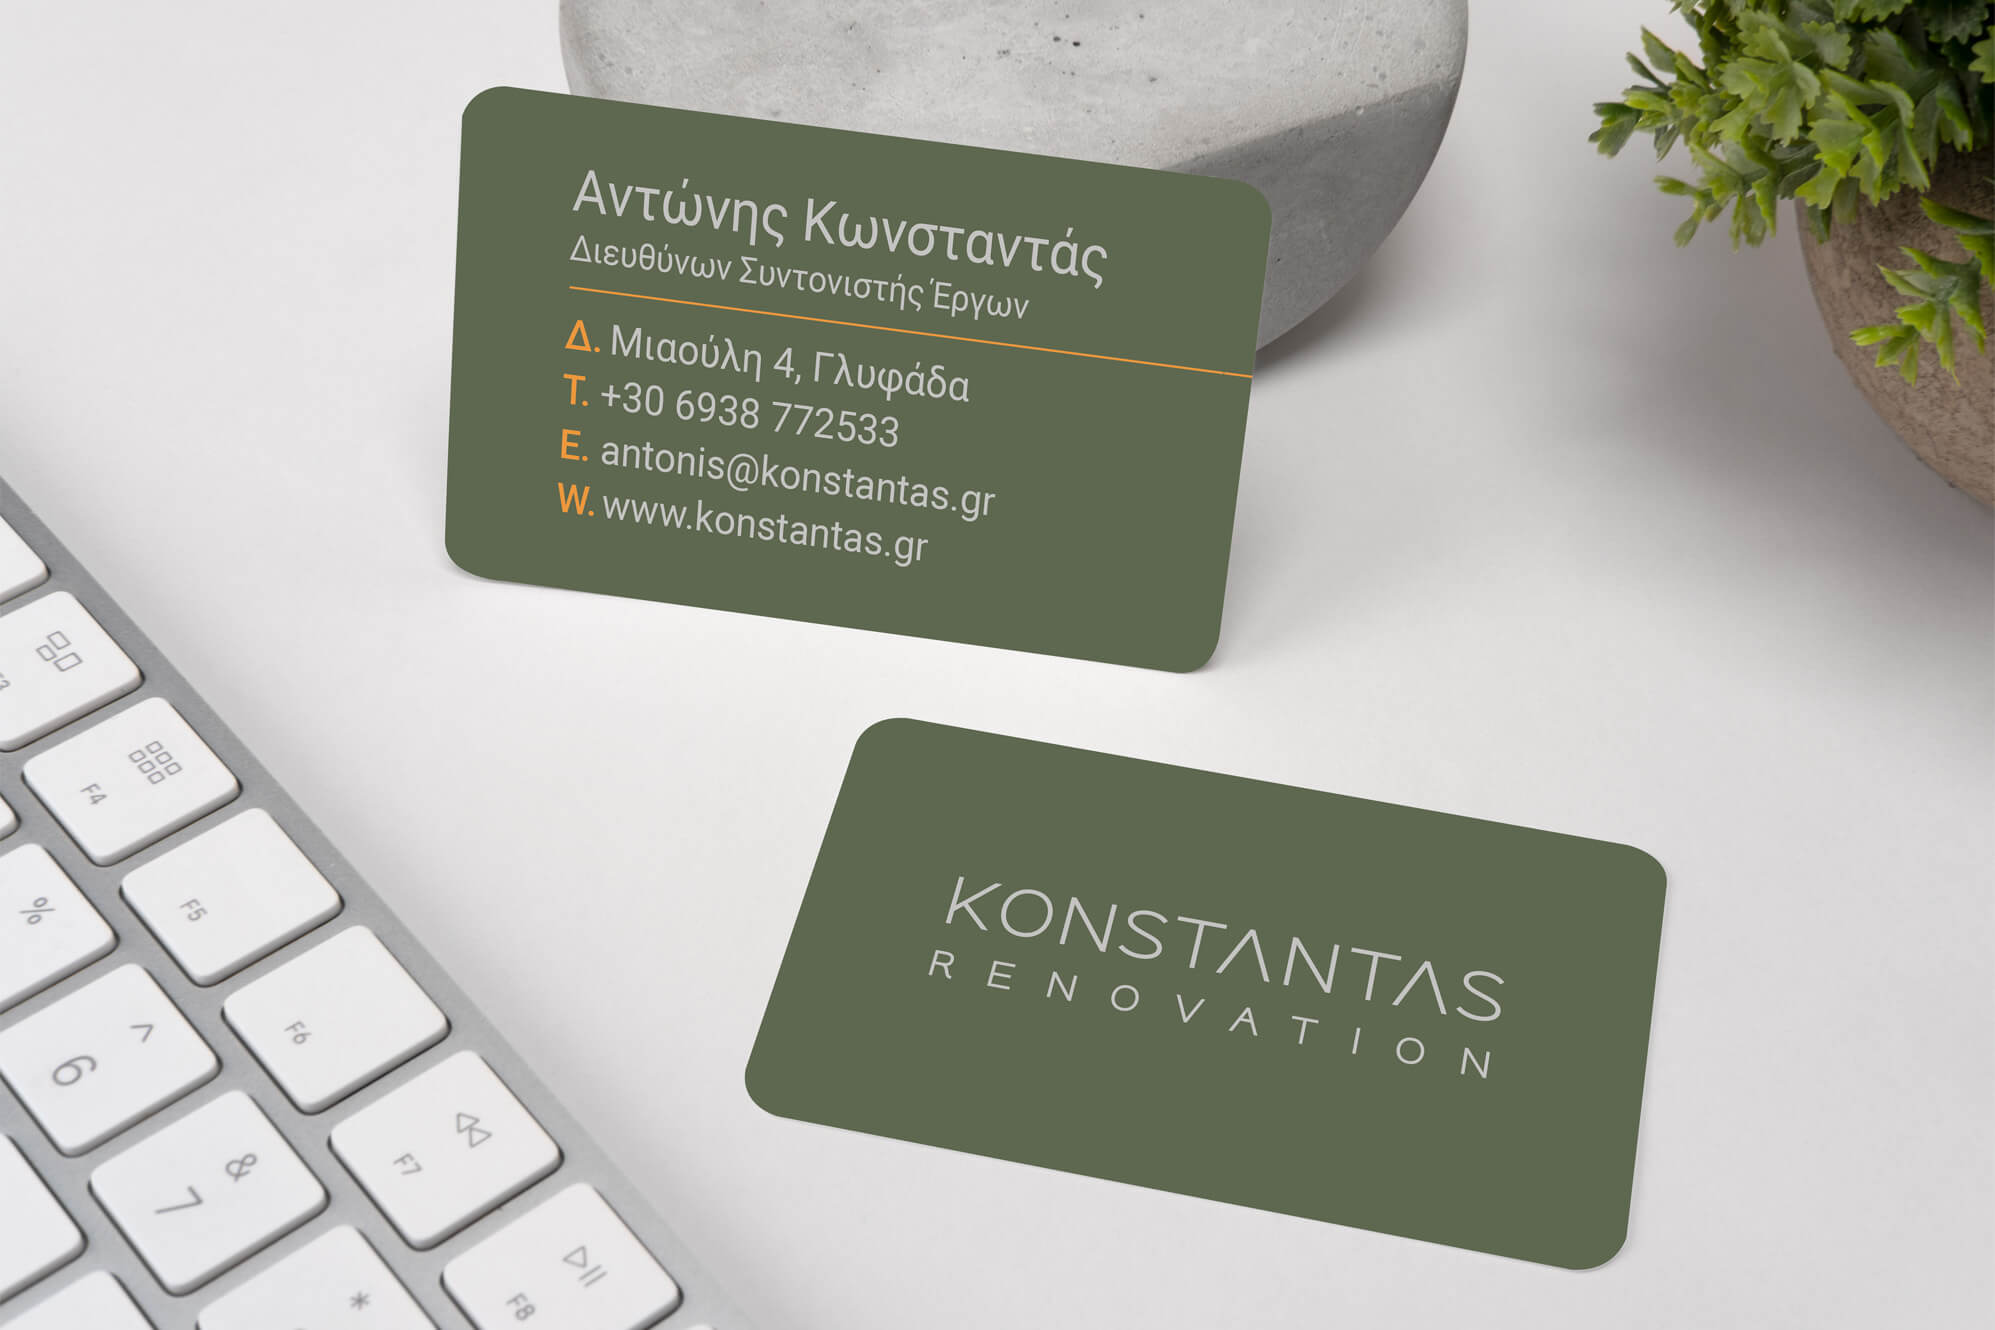 Konstantas Renovation business cards